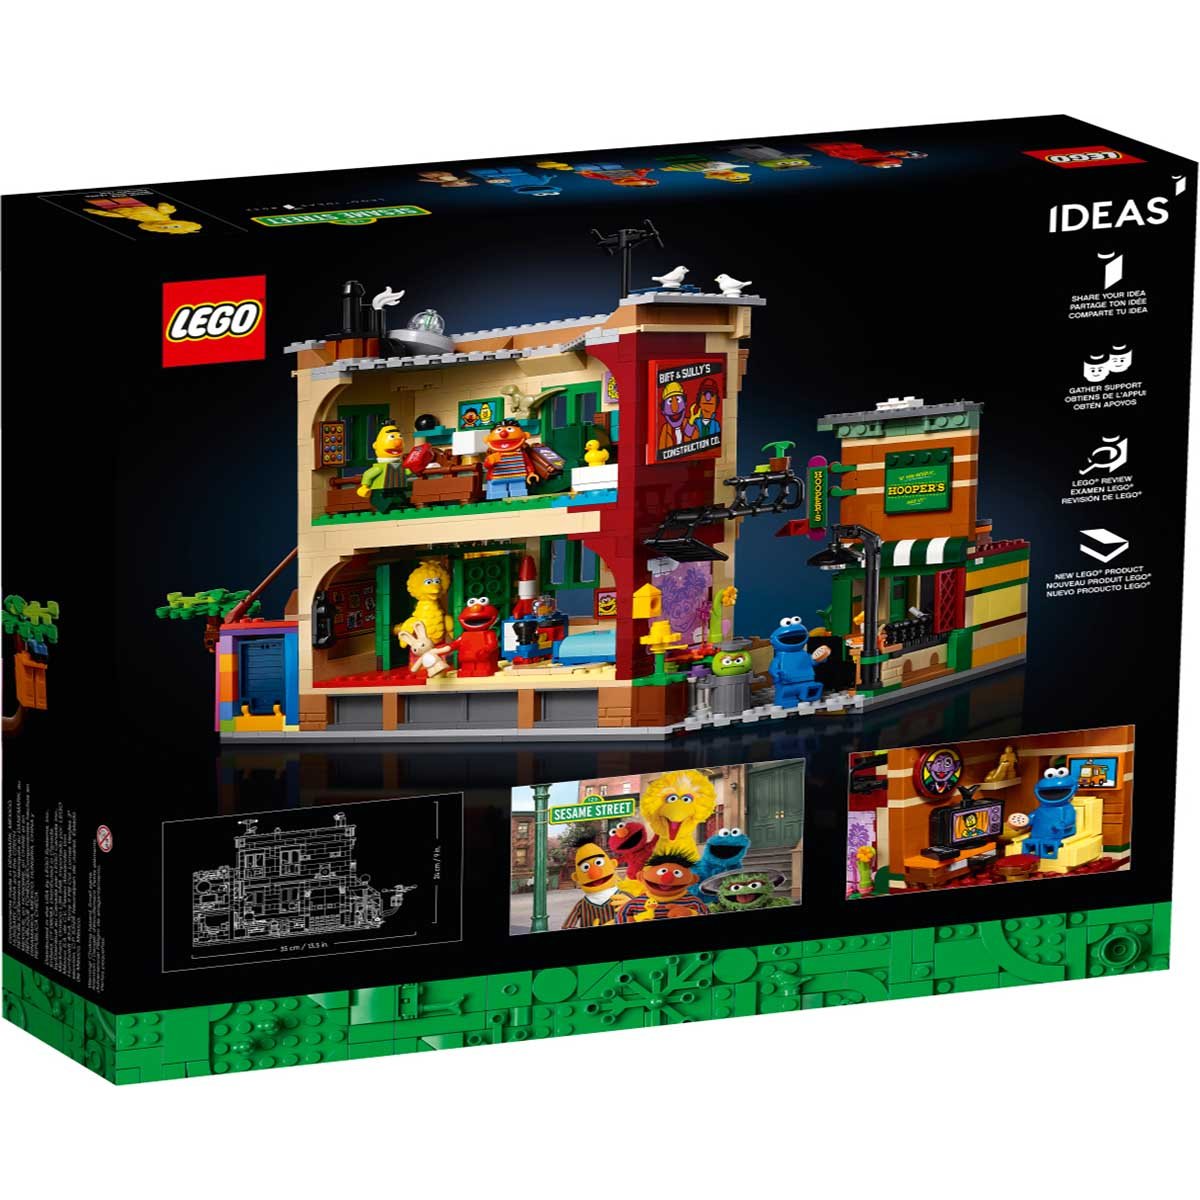 123 Plaza Sesamo Lego Ideas